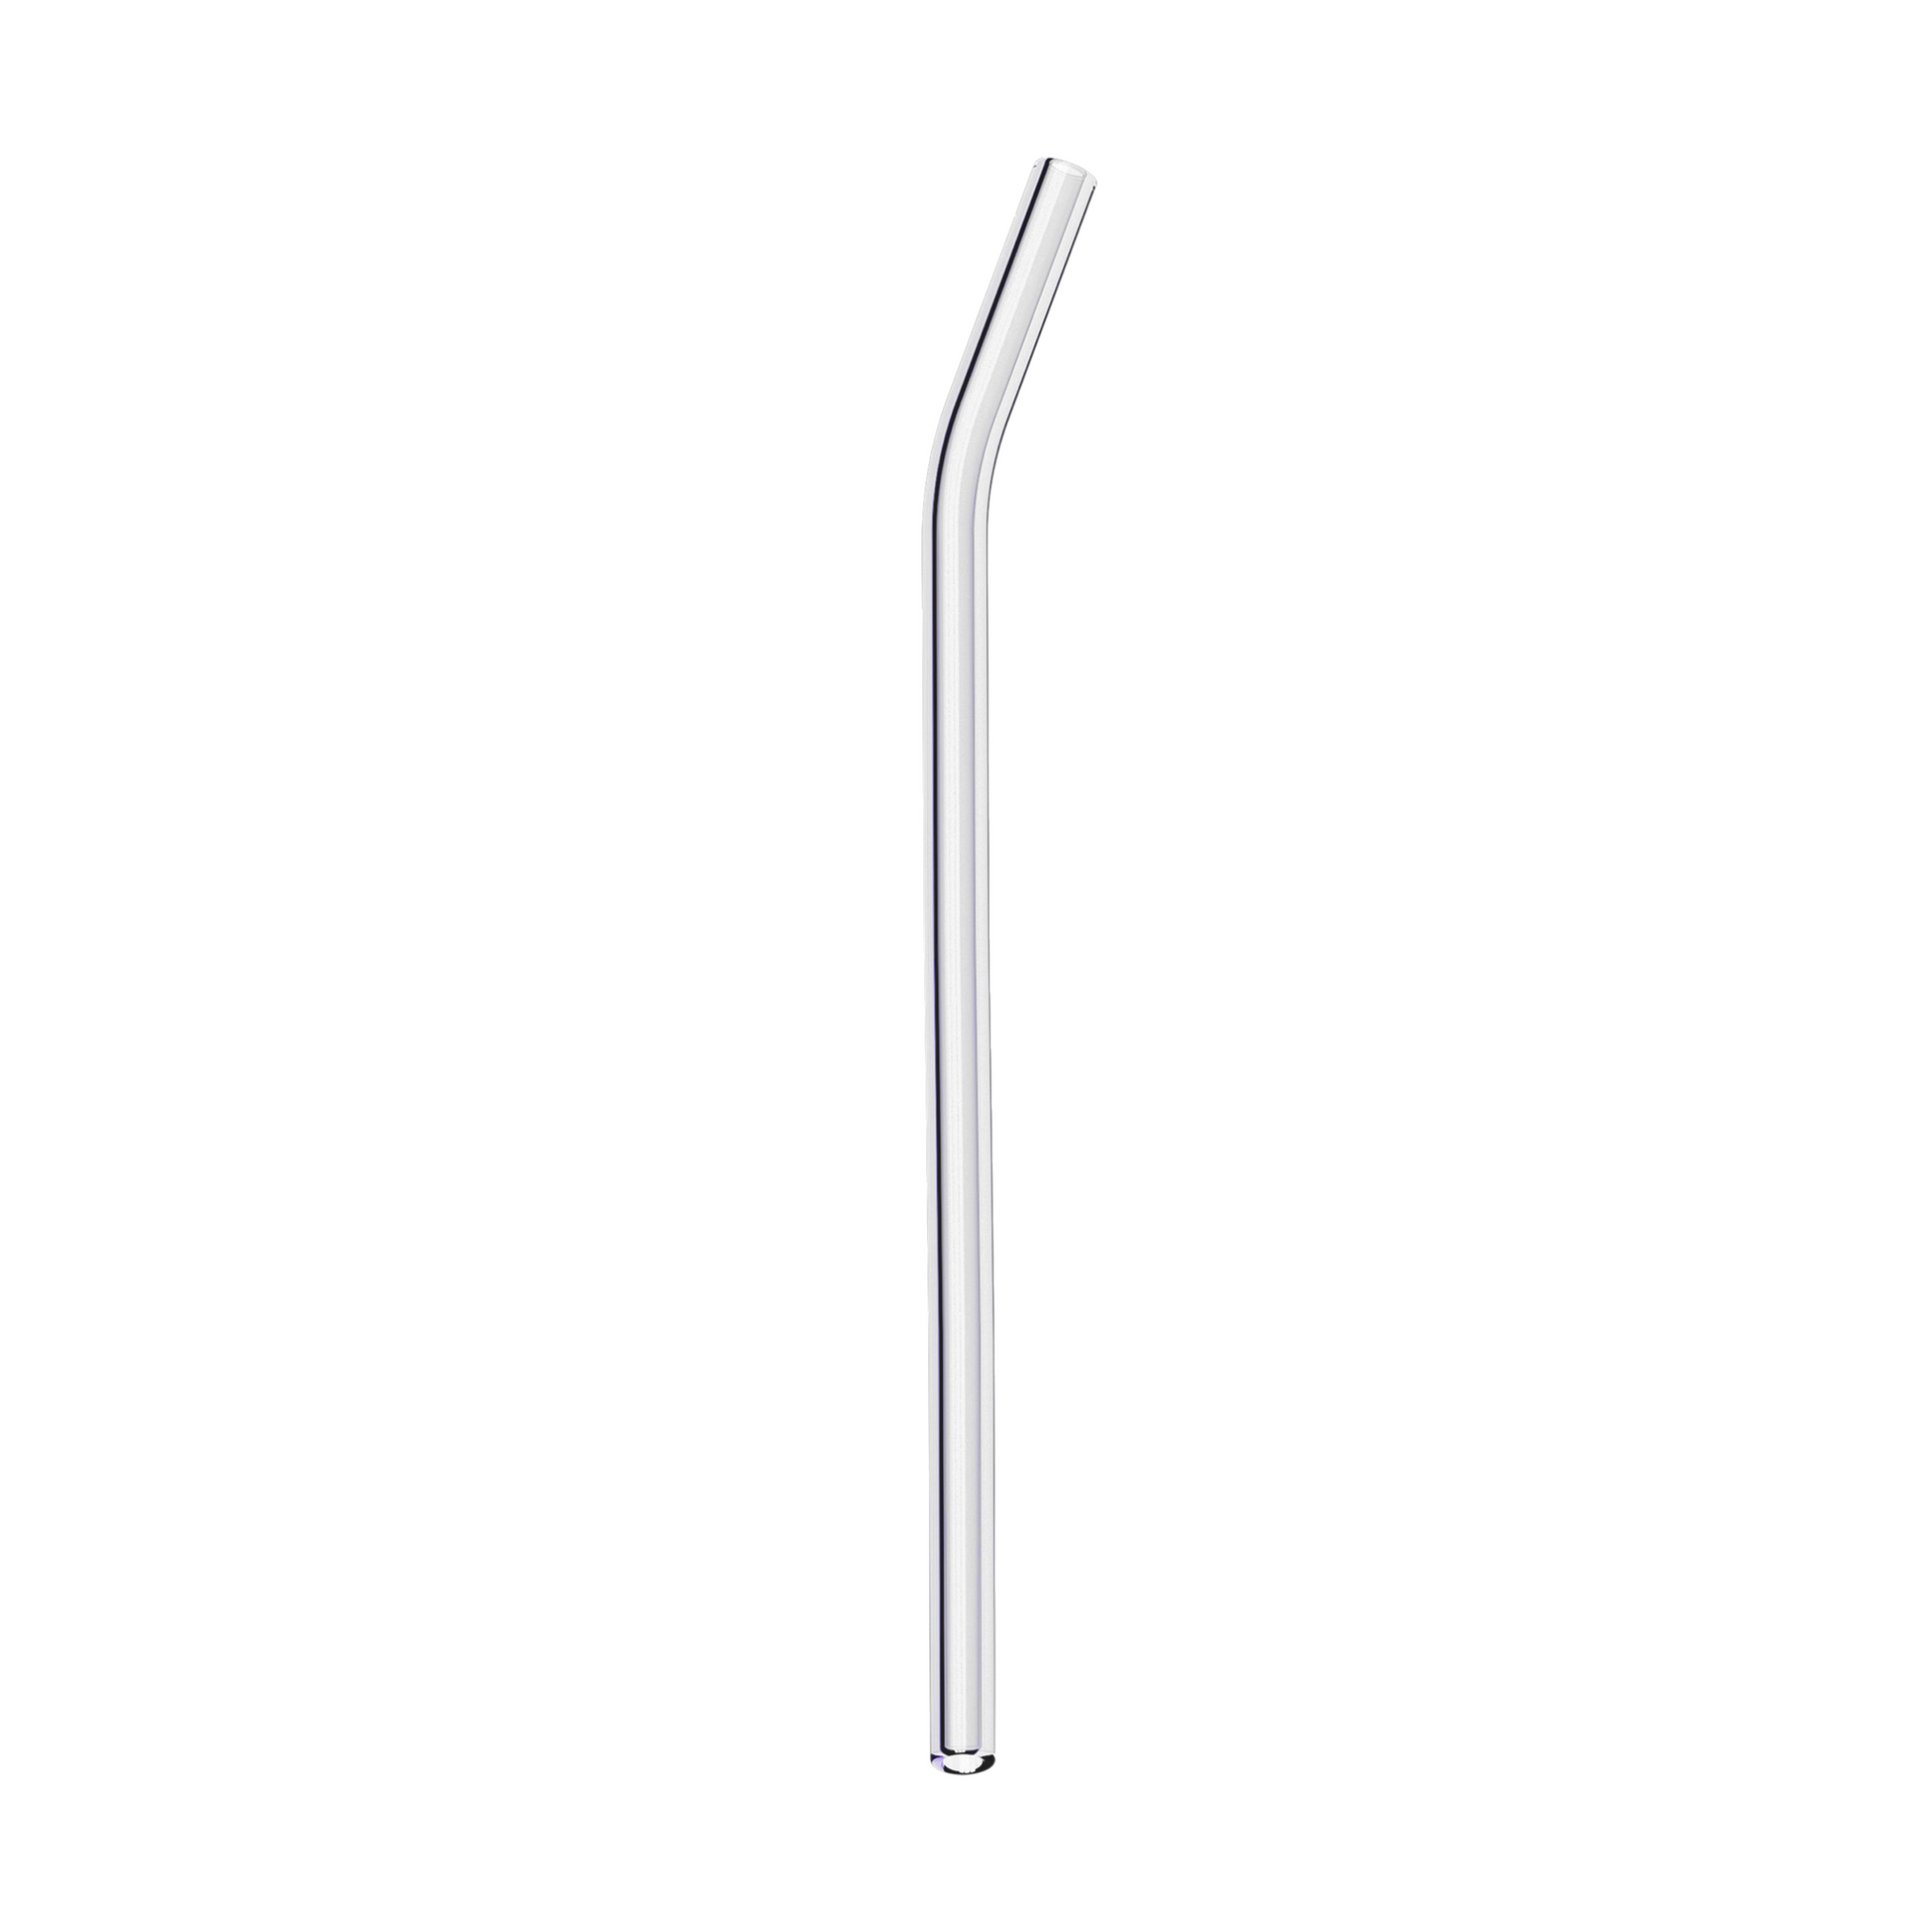 Glass Straws, Mermaid Straw, Reusable Straw, clear glass curved single